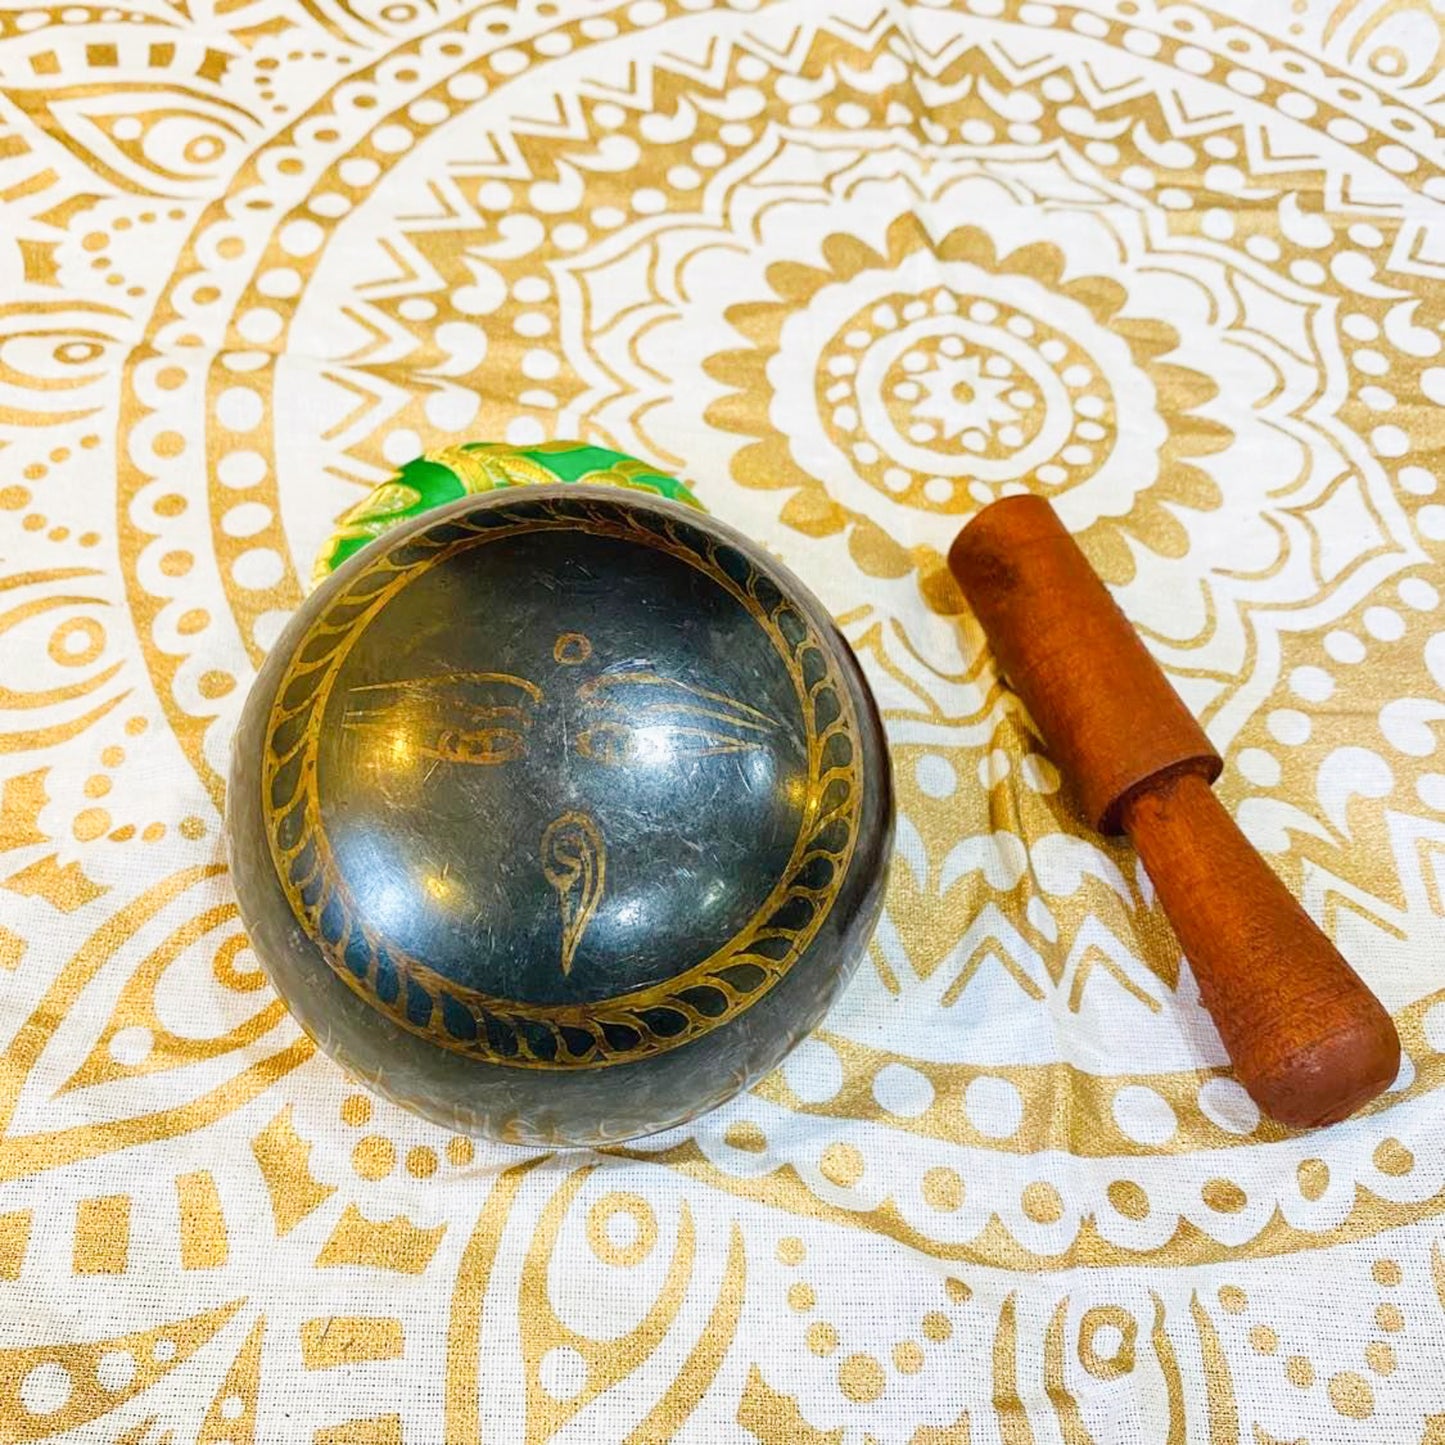 4 inches Healing Mantra Engraved Singing Bowl